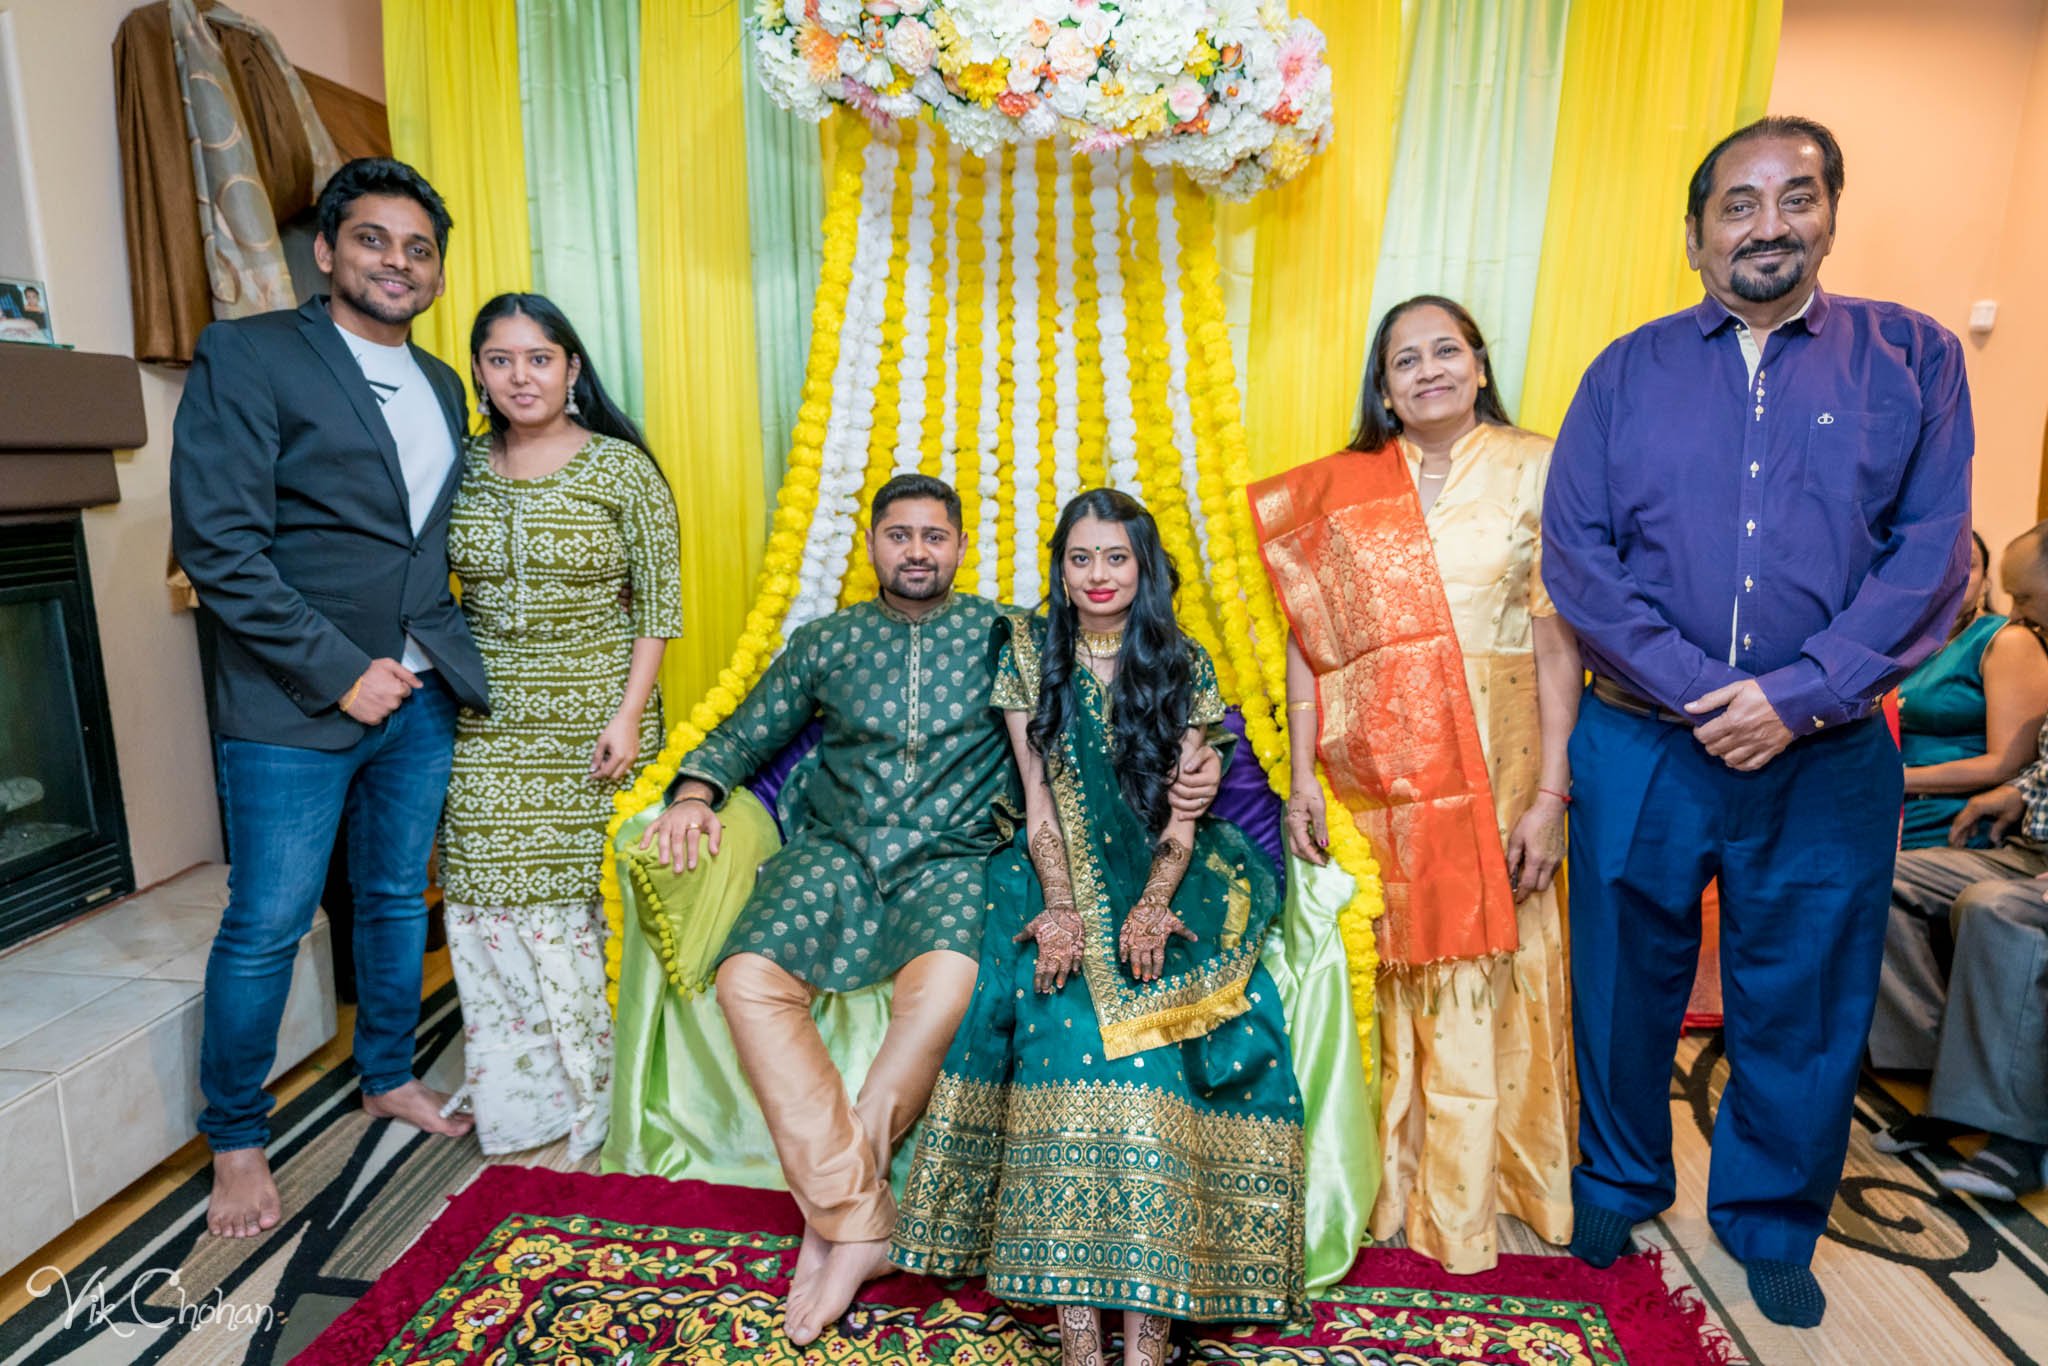 2022-02-03-Hely-&-Parth-Mendi-Indian-Wedding-Vik-Chohan-Photography-Photo-Booth-Social-Media-VCP-153.jpg